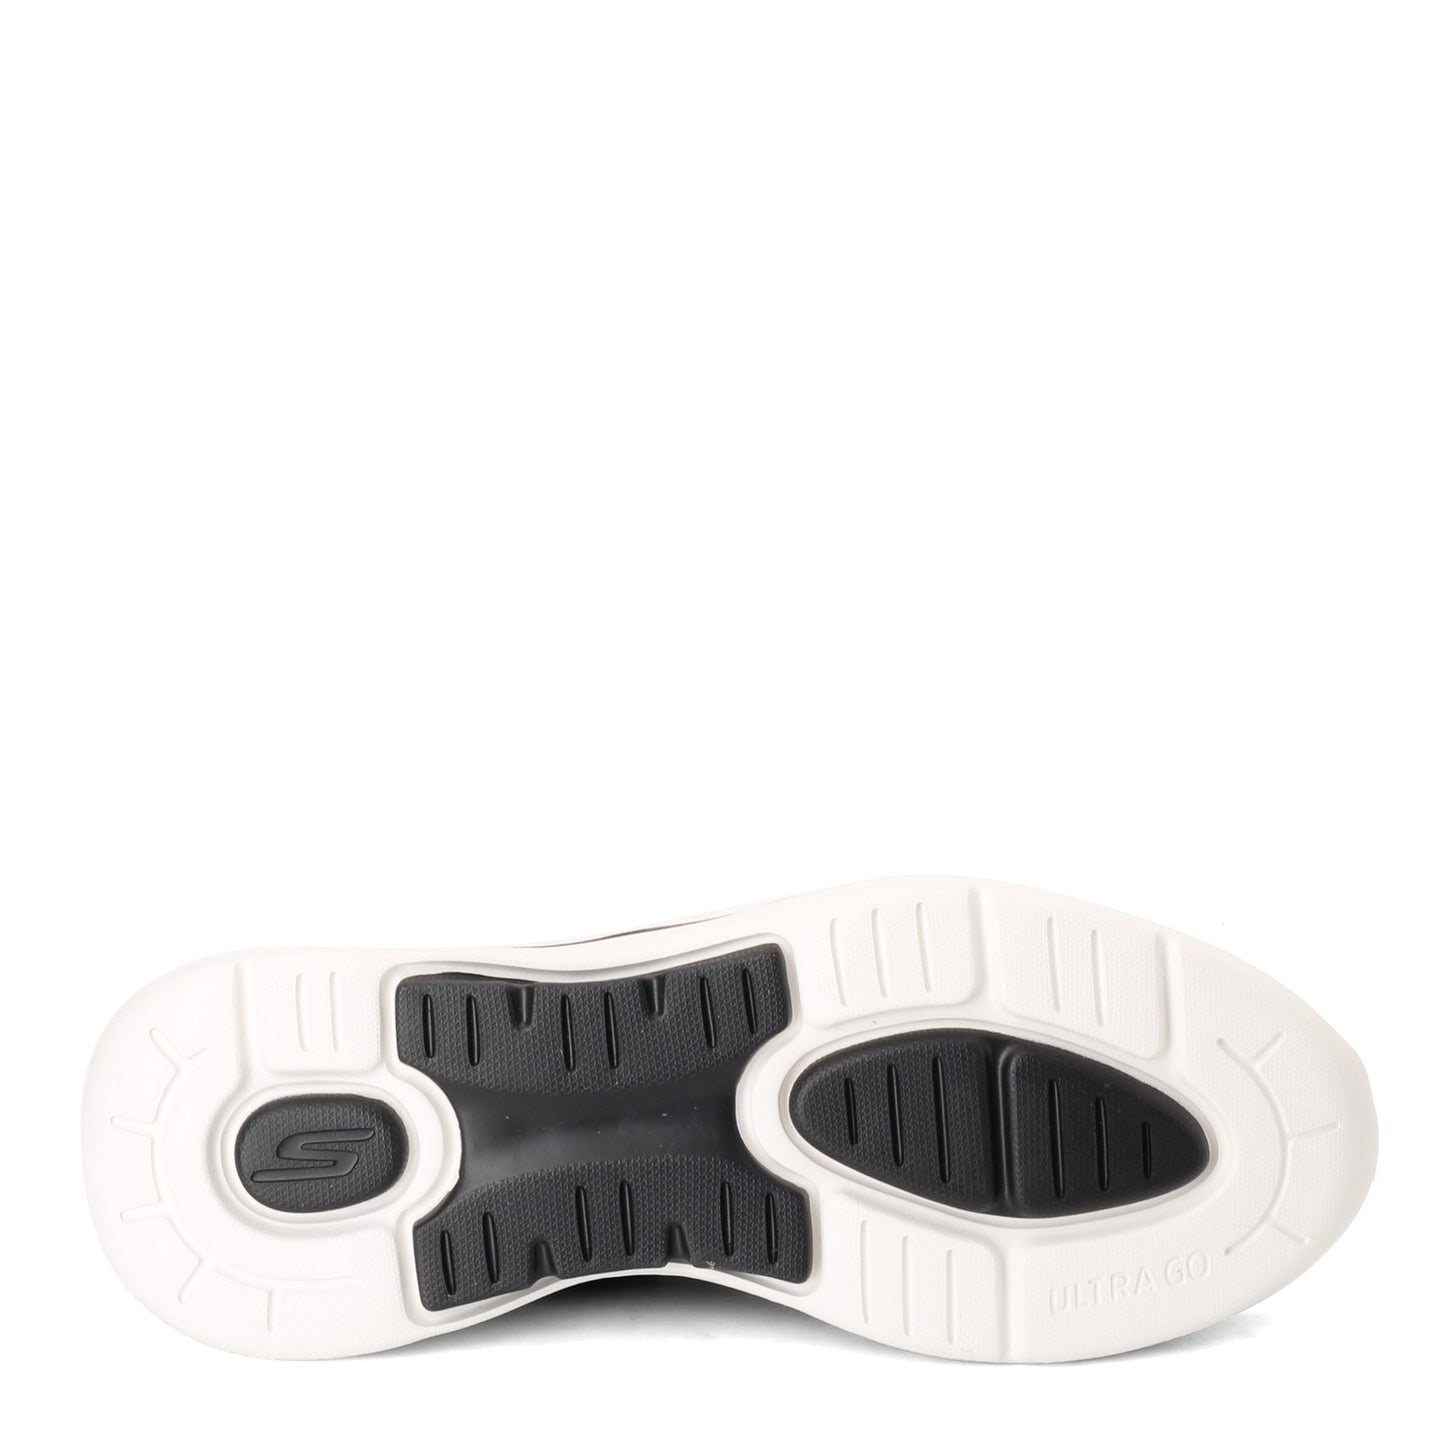 Peltz Shoes  Men's Skechers GOwalk Arch Fit - Togpath Slip-On - Wide Width BLACK / WHITE 216121WW-BLK